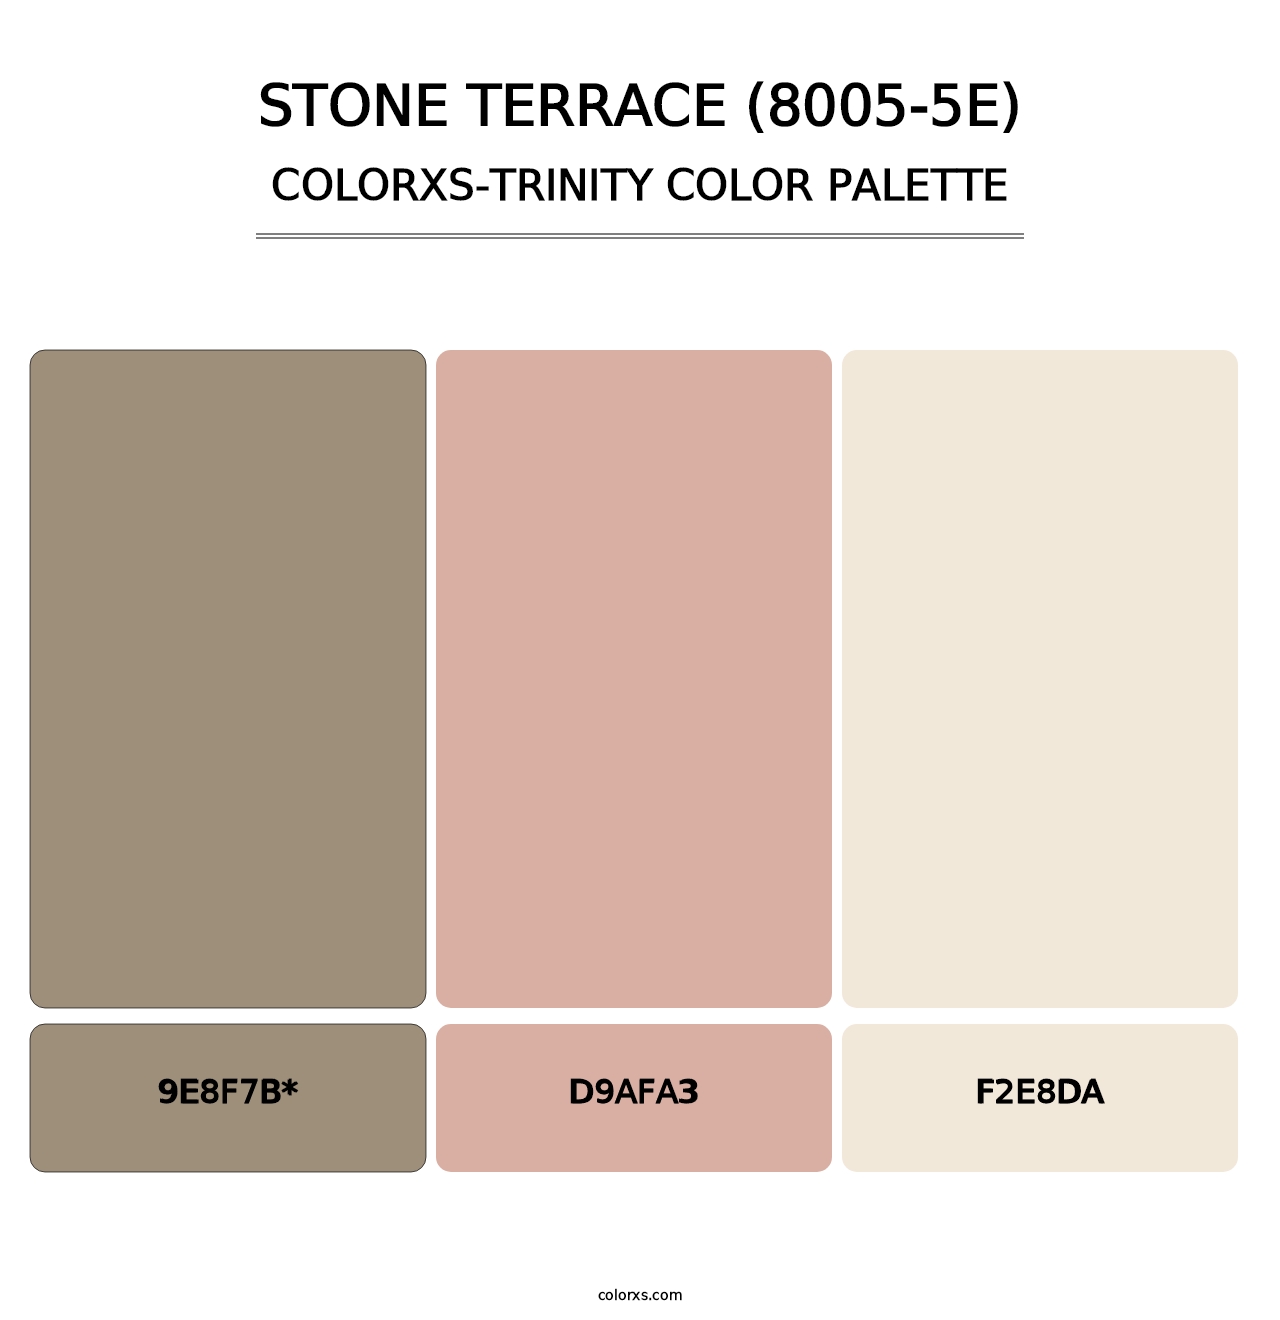 Stone Terrace (8005-5E) - Colorxs Trinity Palette